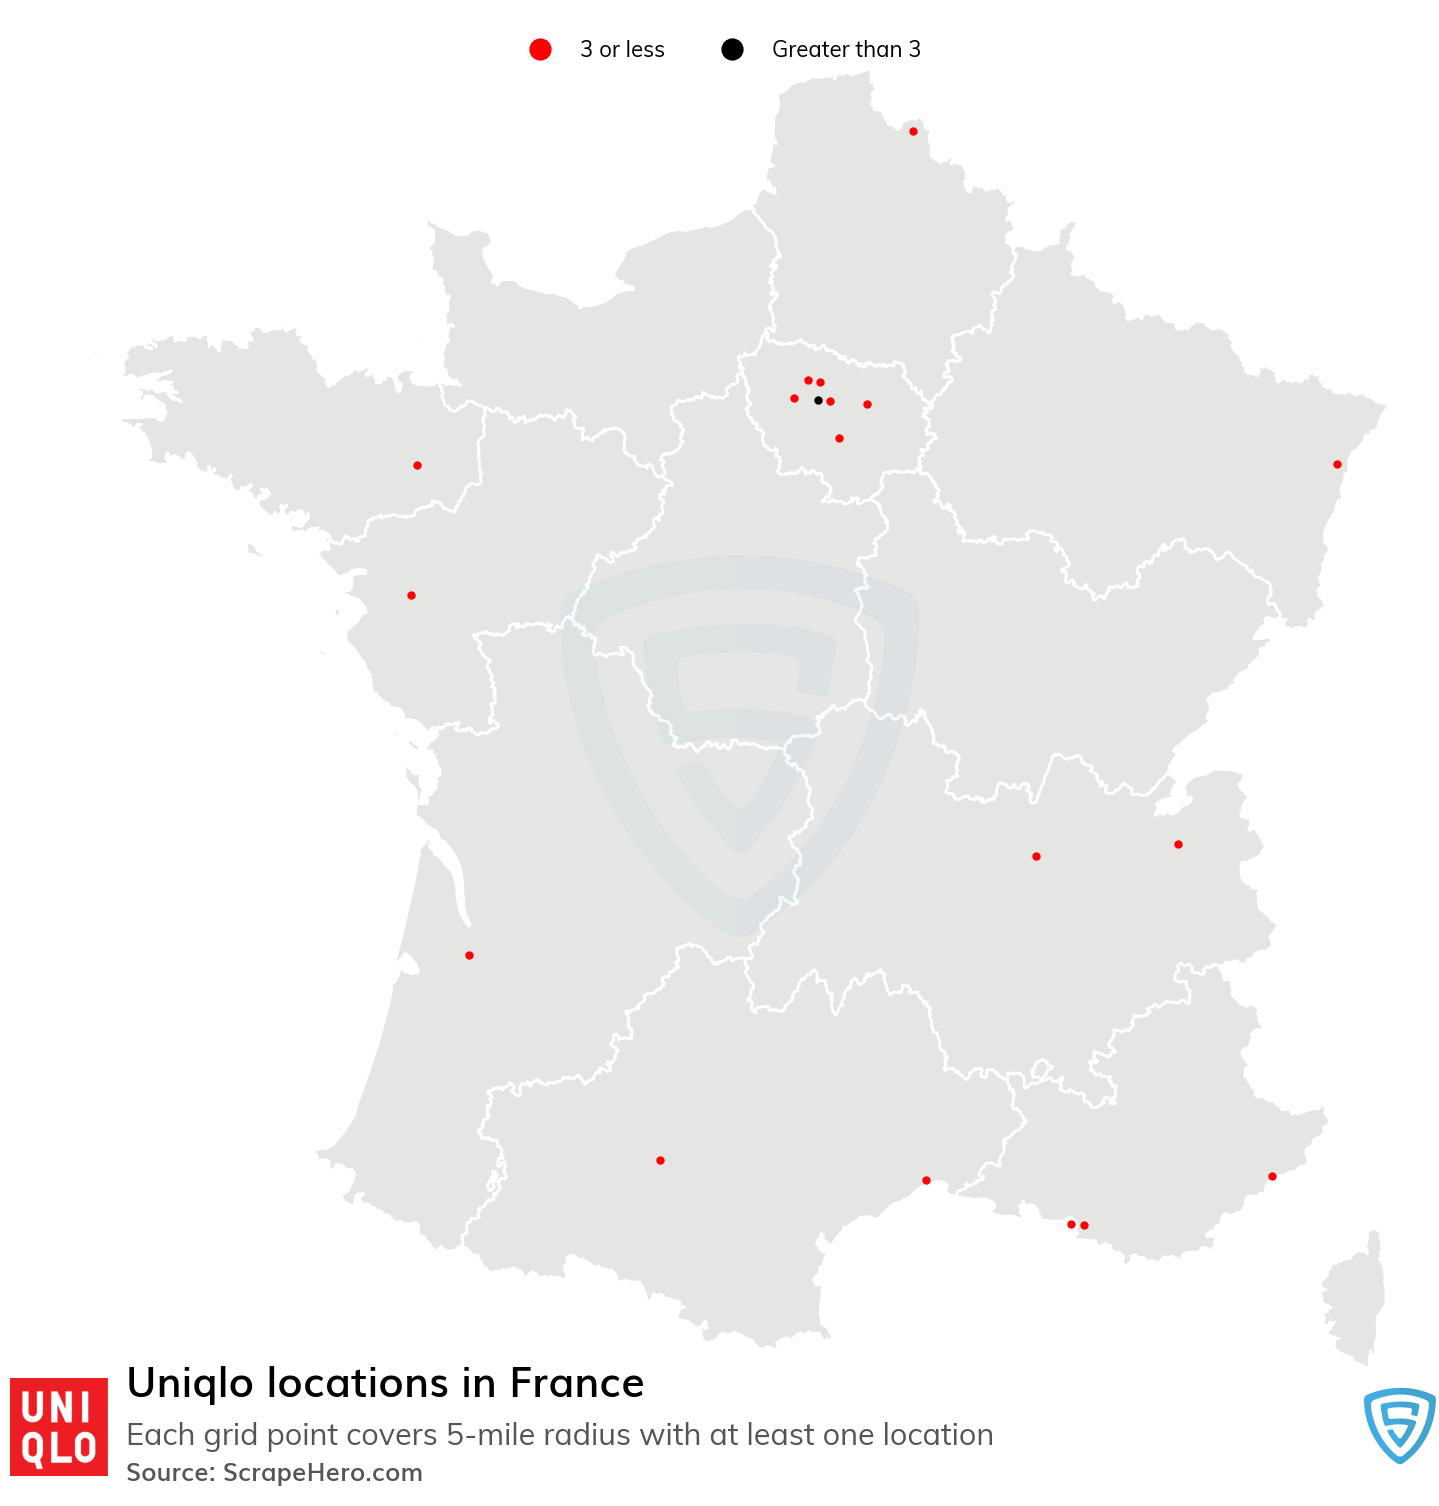 Overredend Oeps liberaal Number of Uniqlo locations in France in 2023 | ScrapeHero